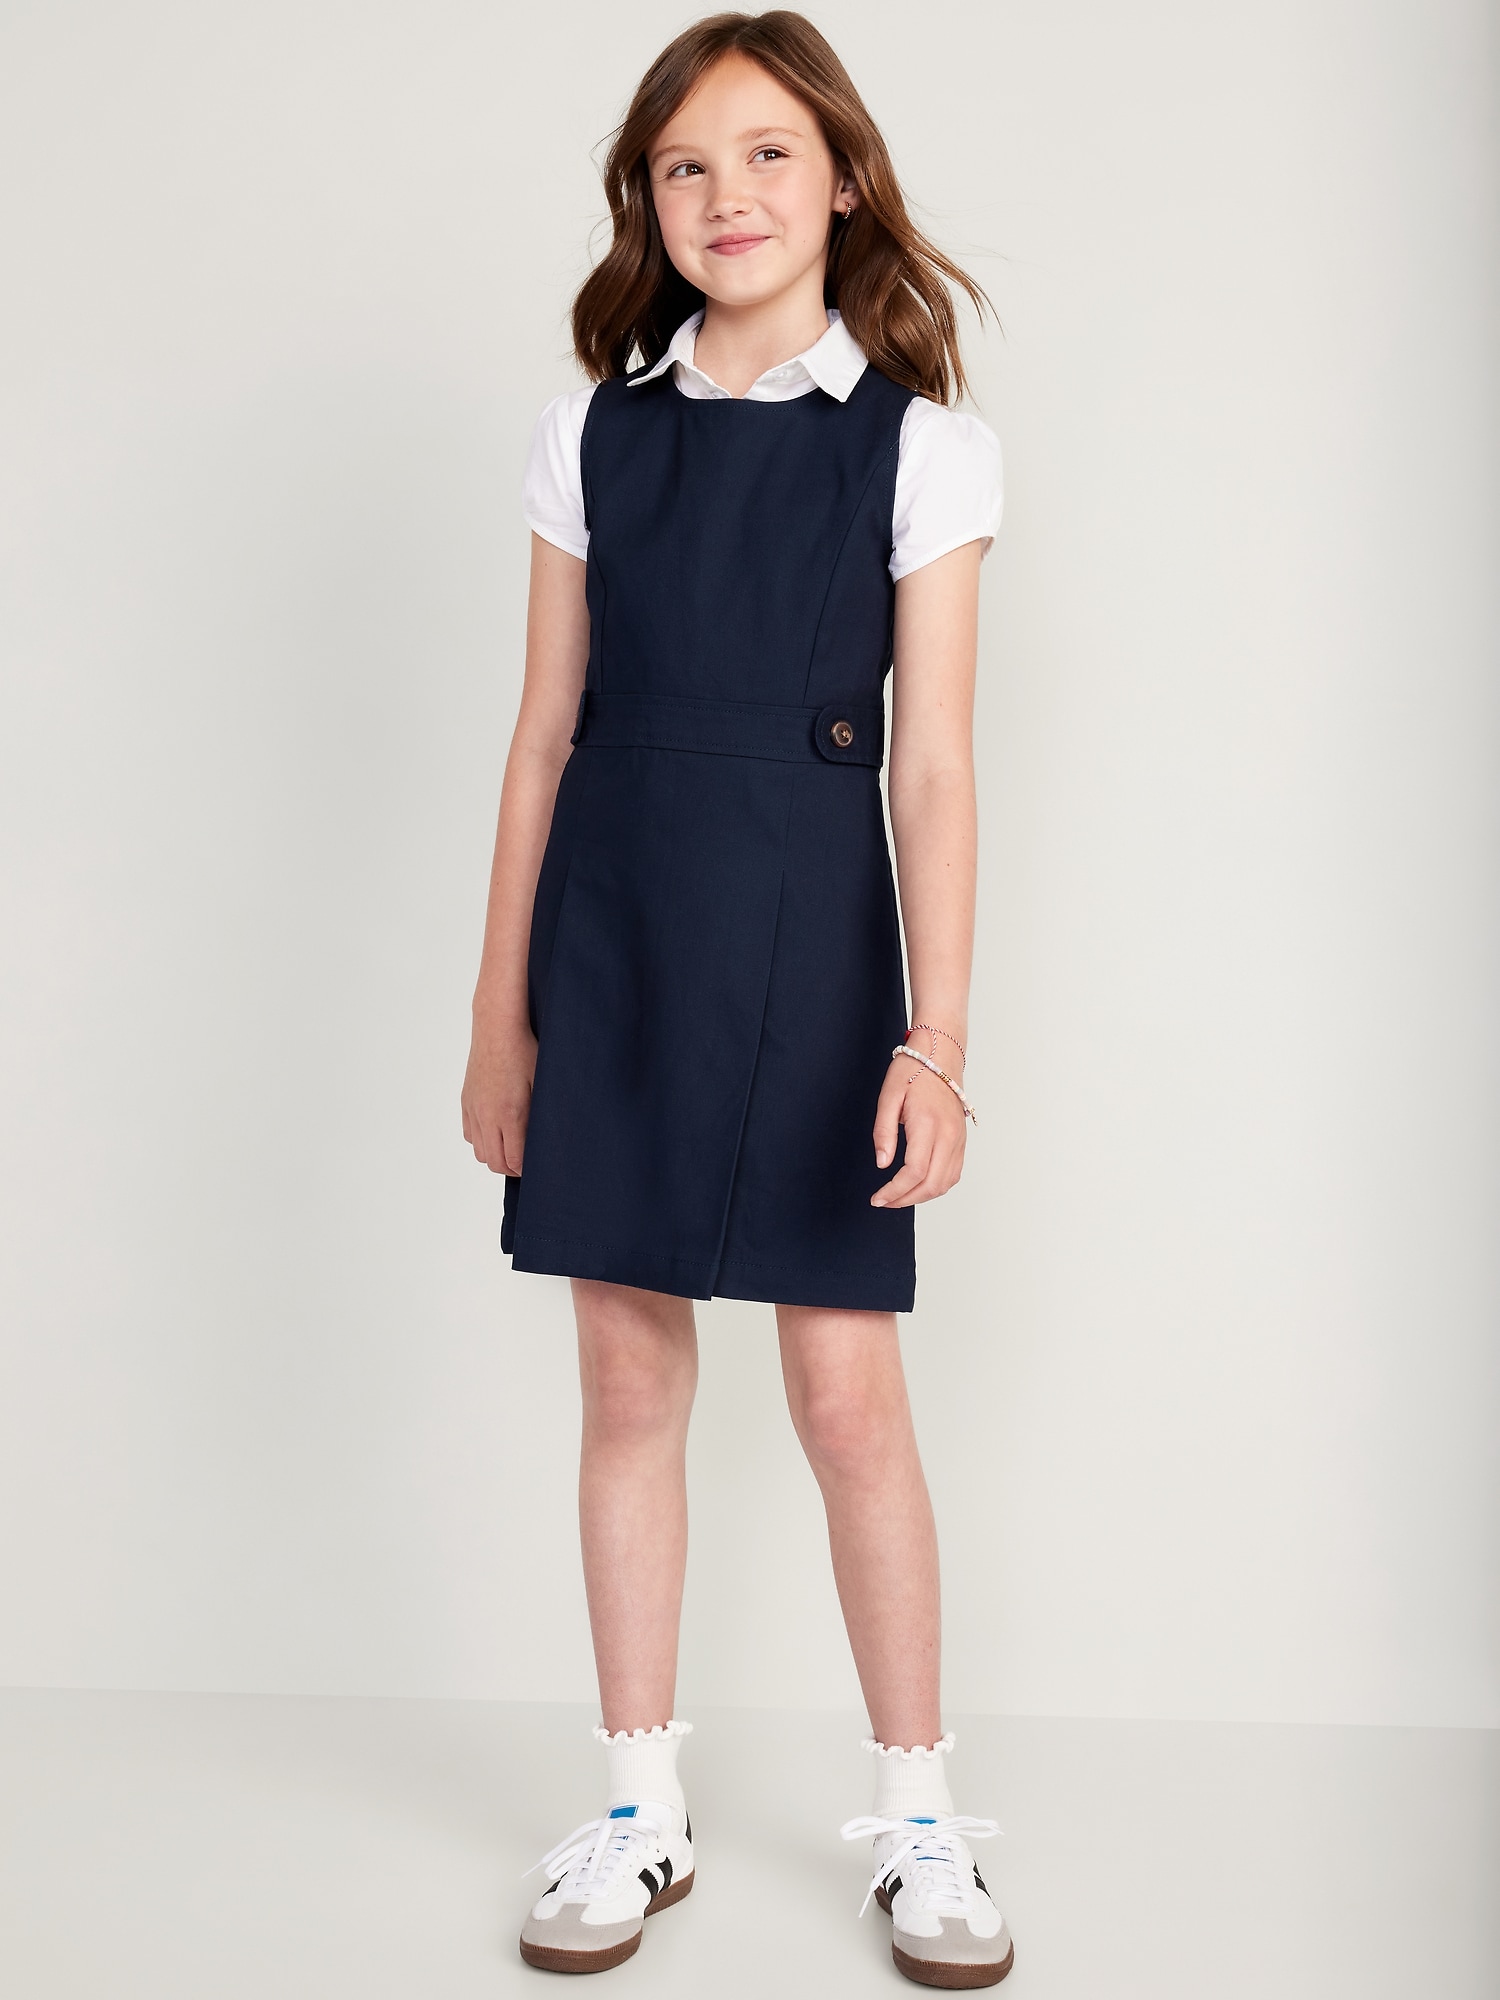 Old Navy Sleeveless School Uniform Dress for Girls blue. 1